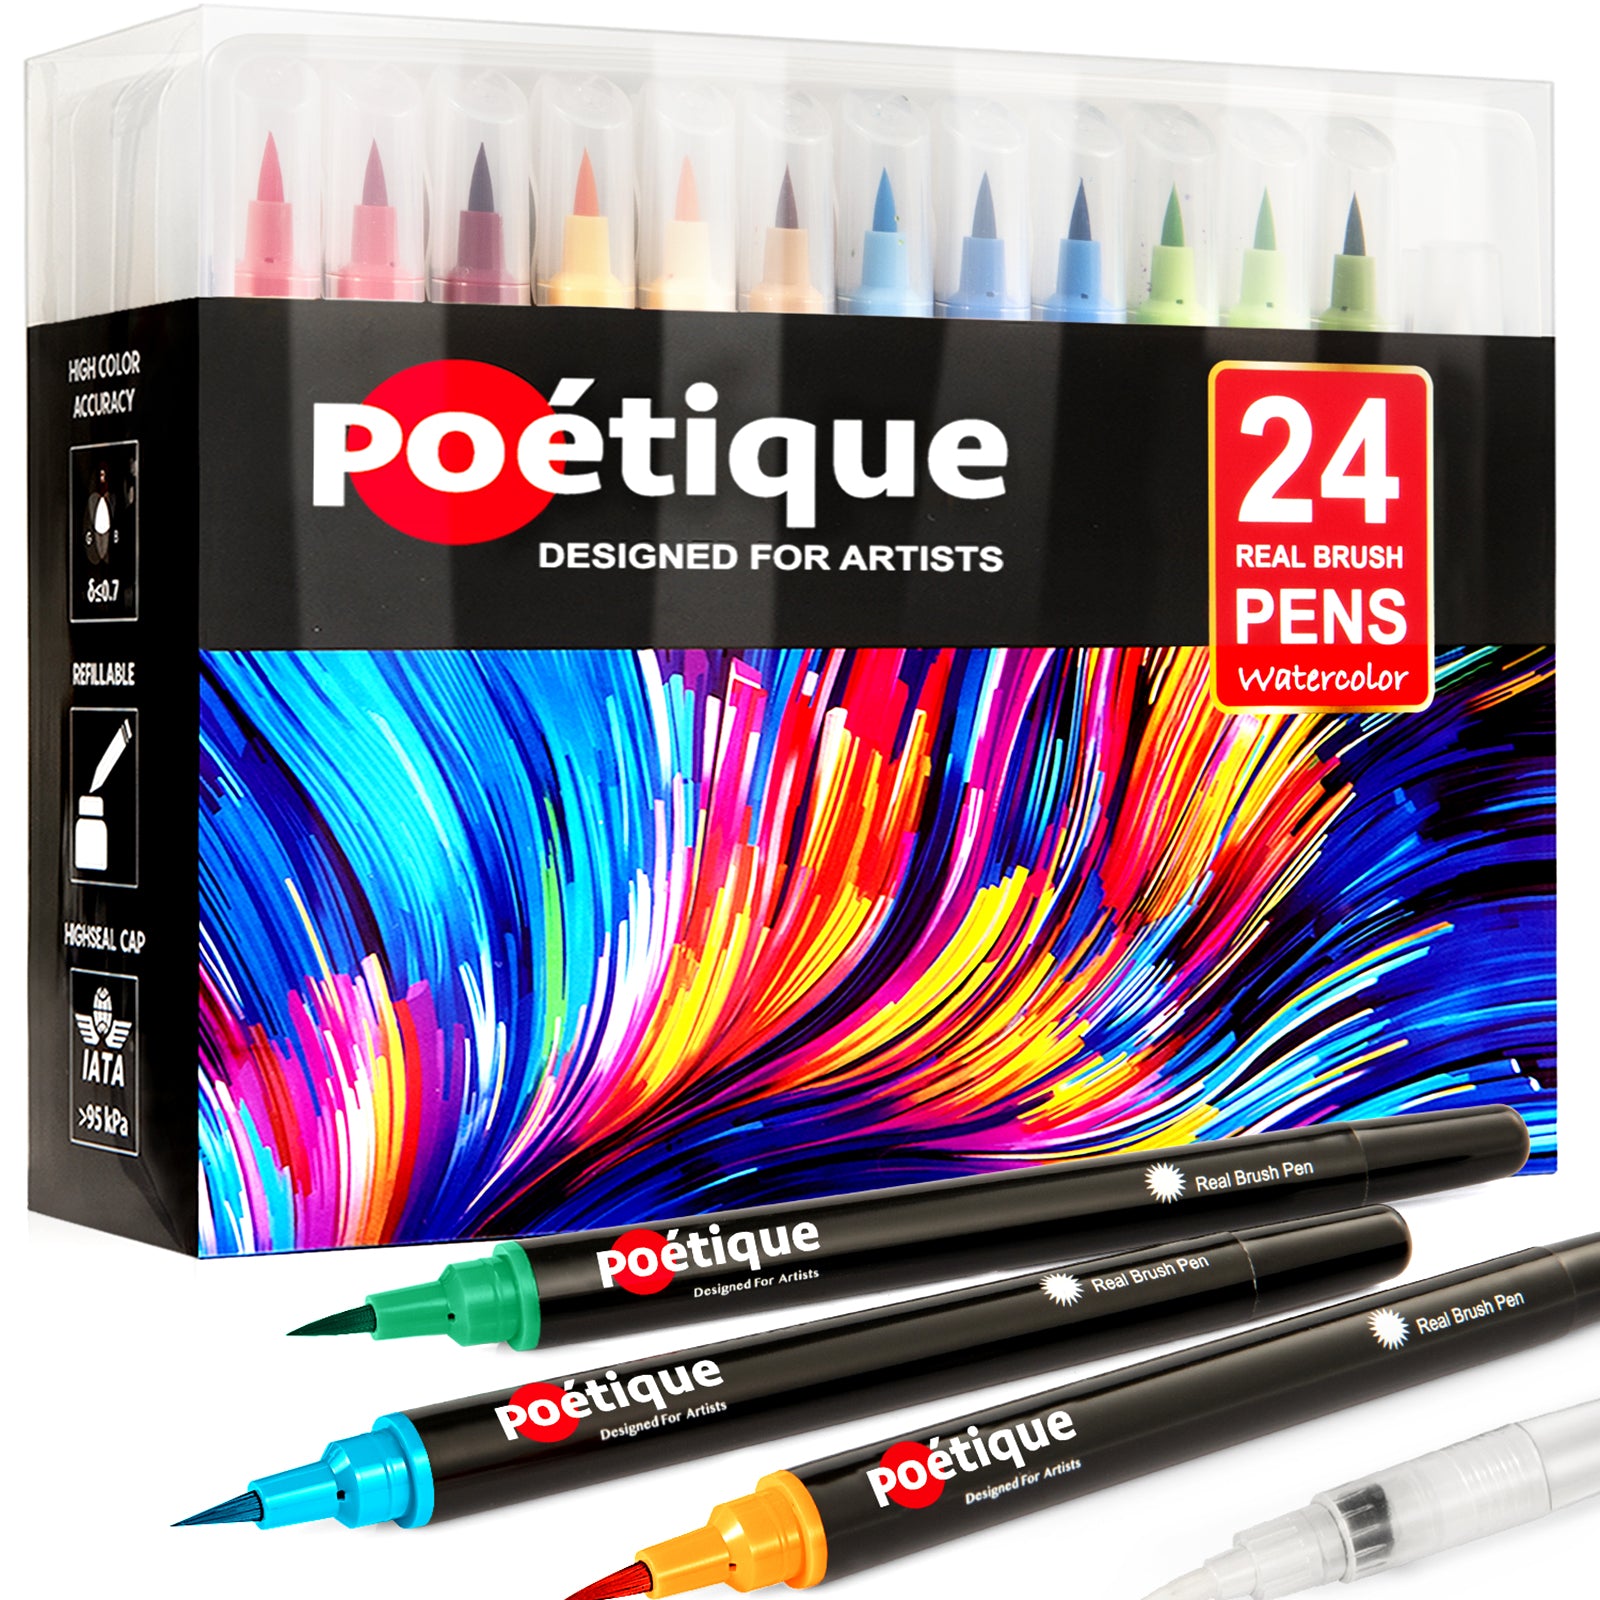  KINGART Pro Brush Pens, 24 Colors for Real Watercolor